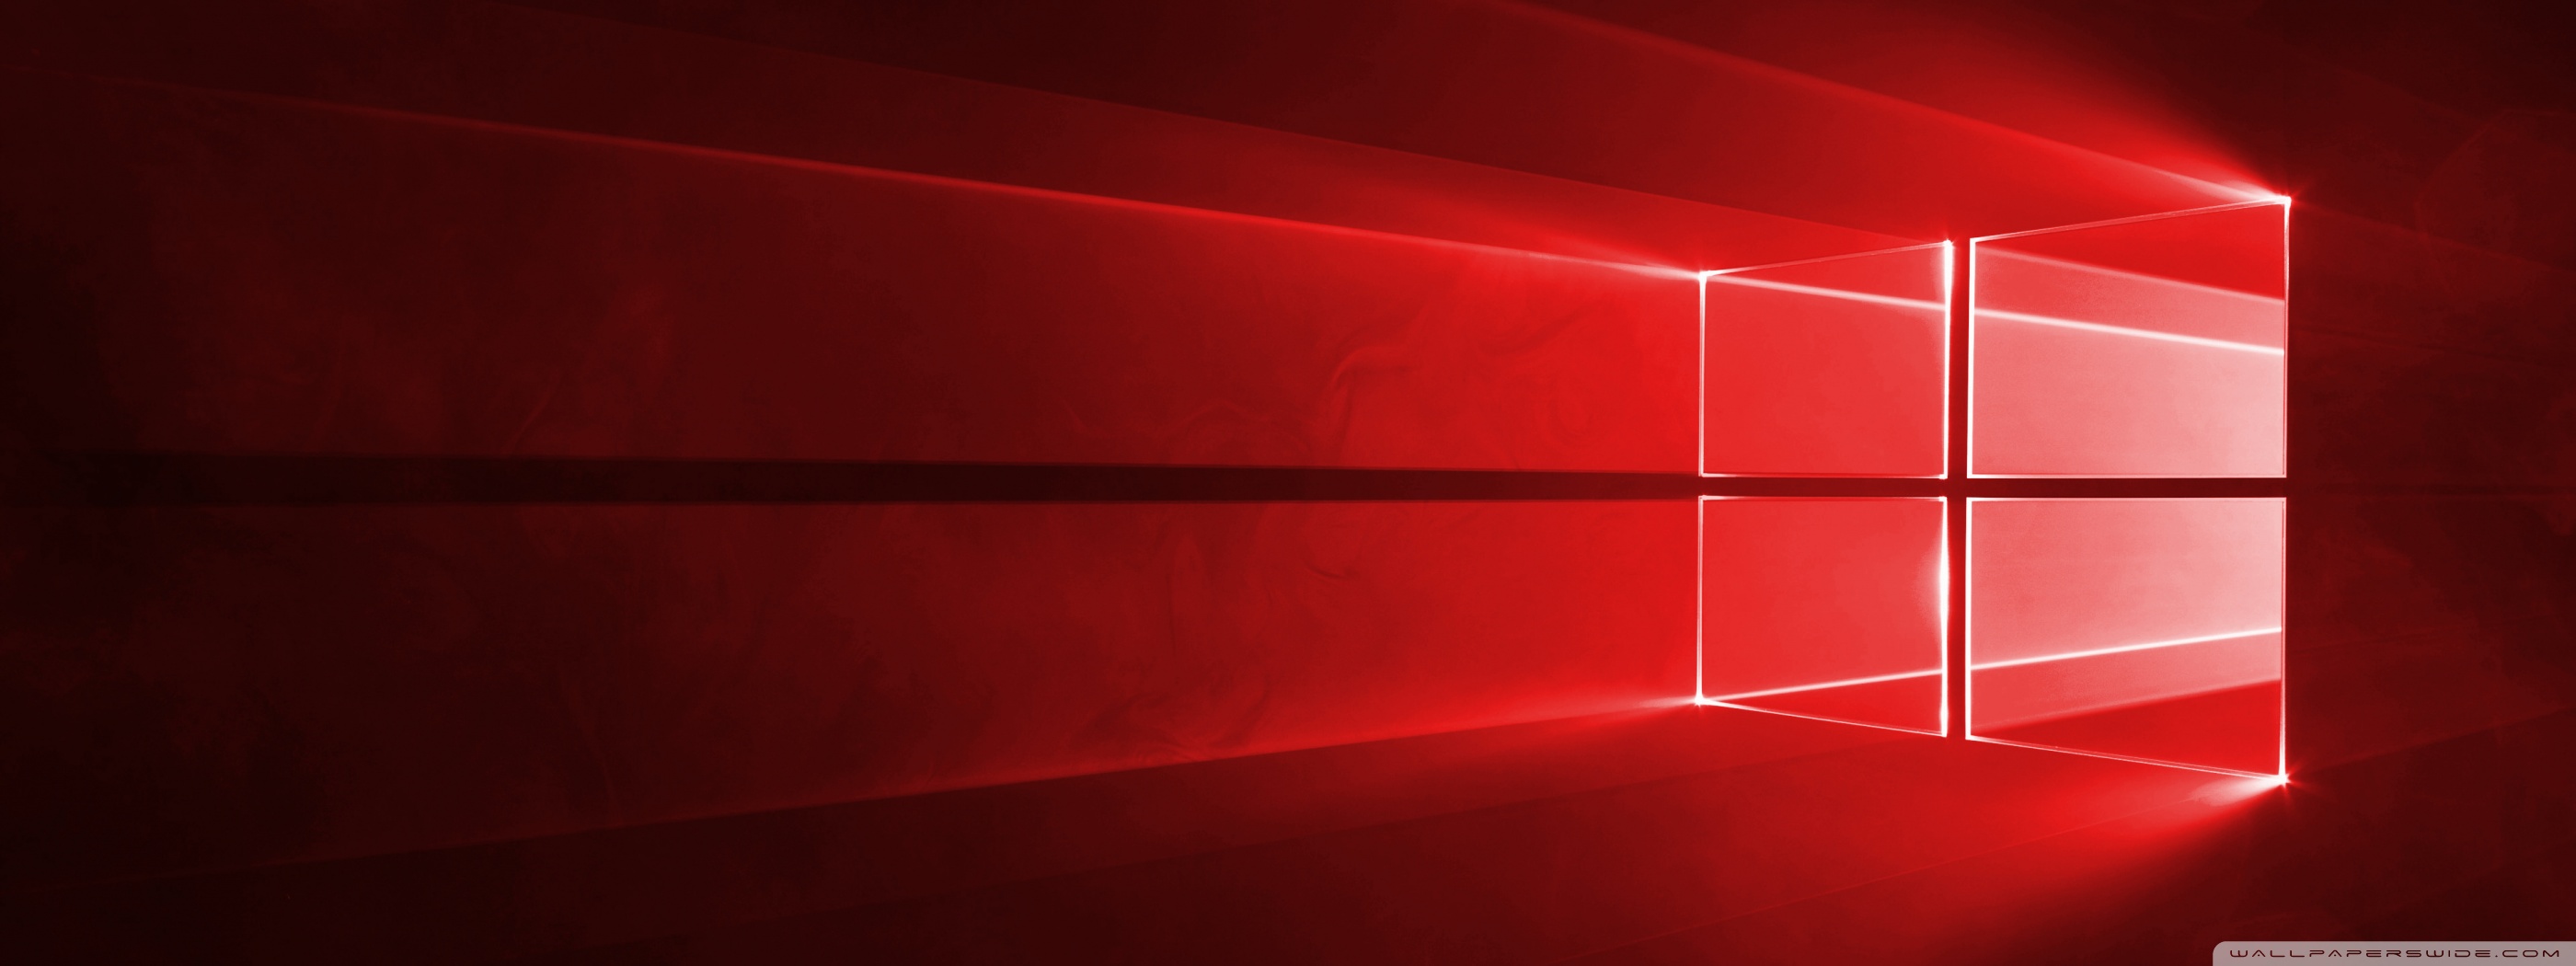 Windows 10 Red In 4k Ultra Hd Desktop Background Wallpaper For Widescreen Ultrawide Desktop Laptop Multi Display Dual Triple Monitor Tablet Smartphone